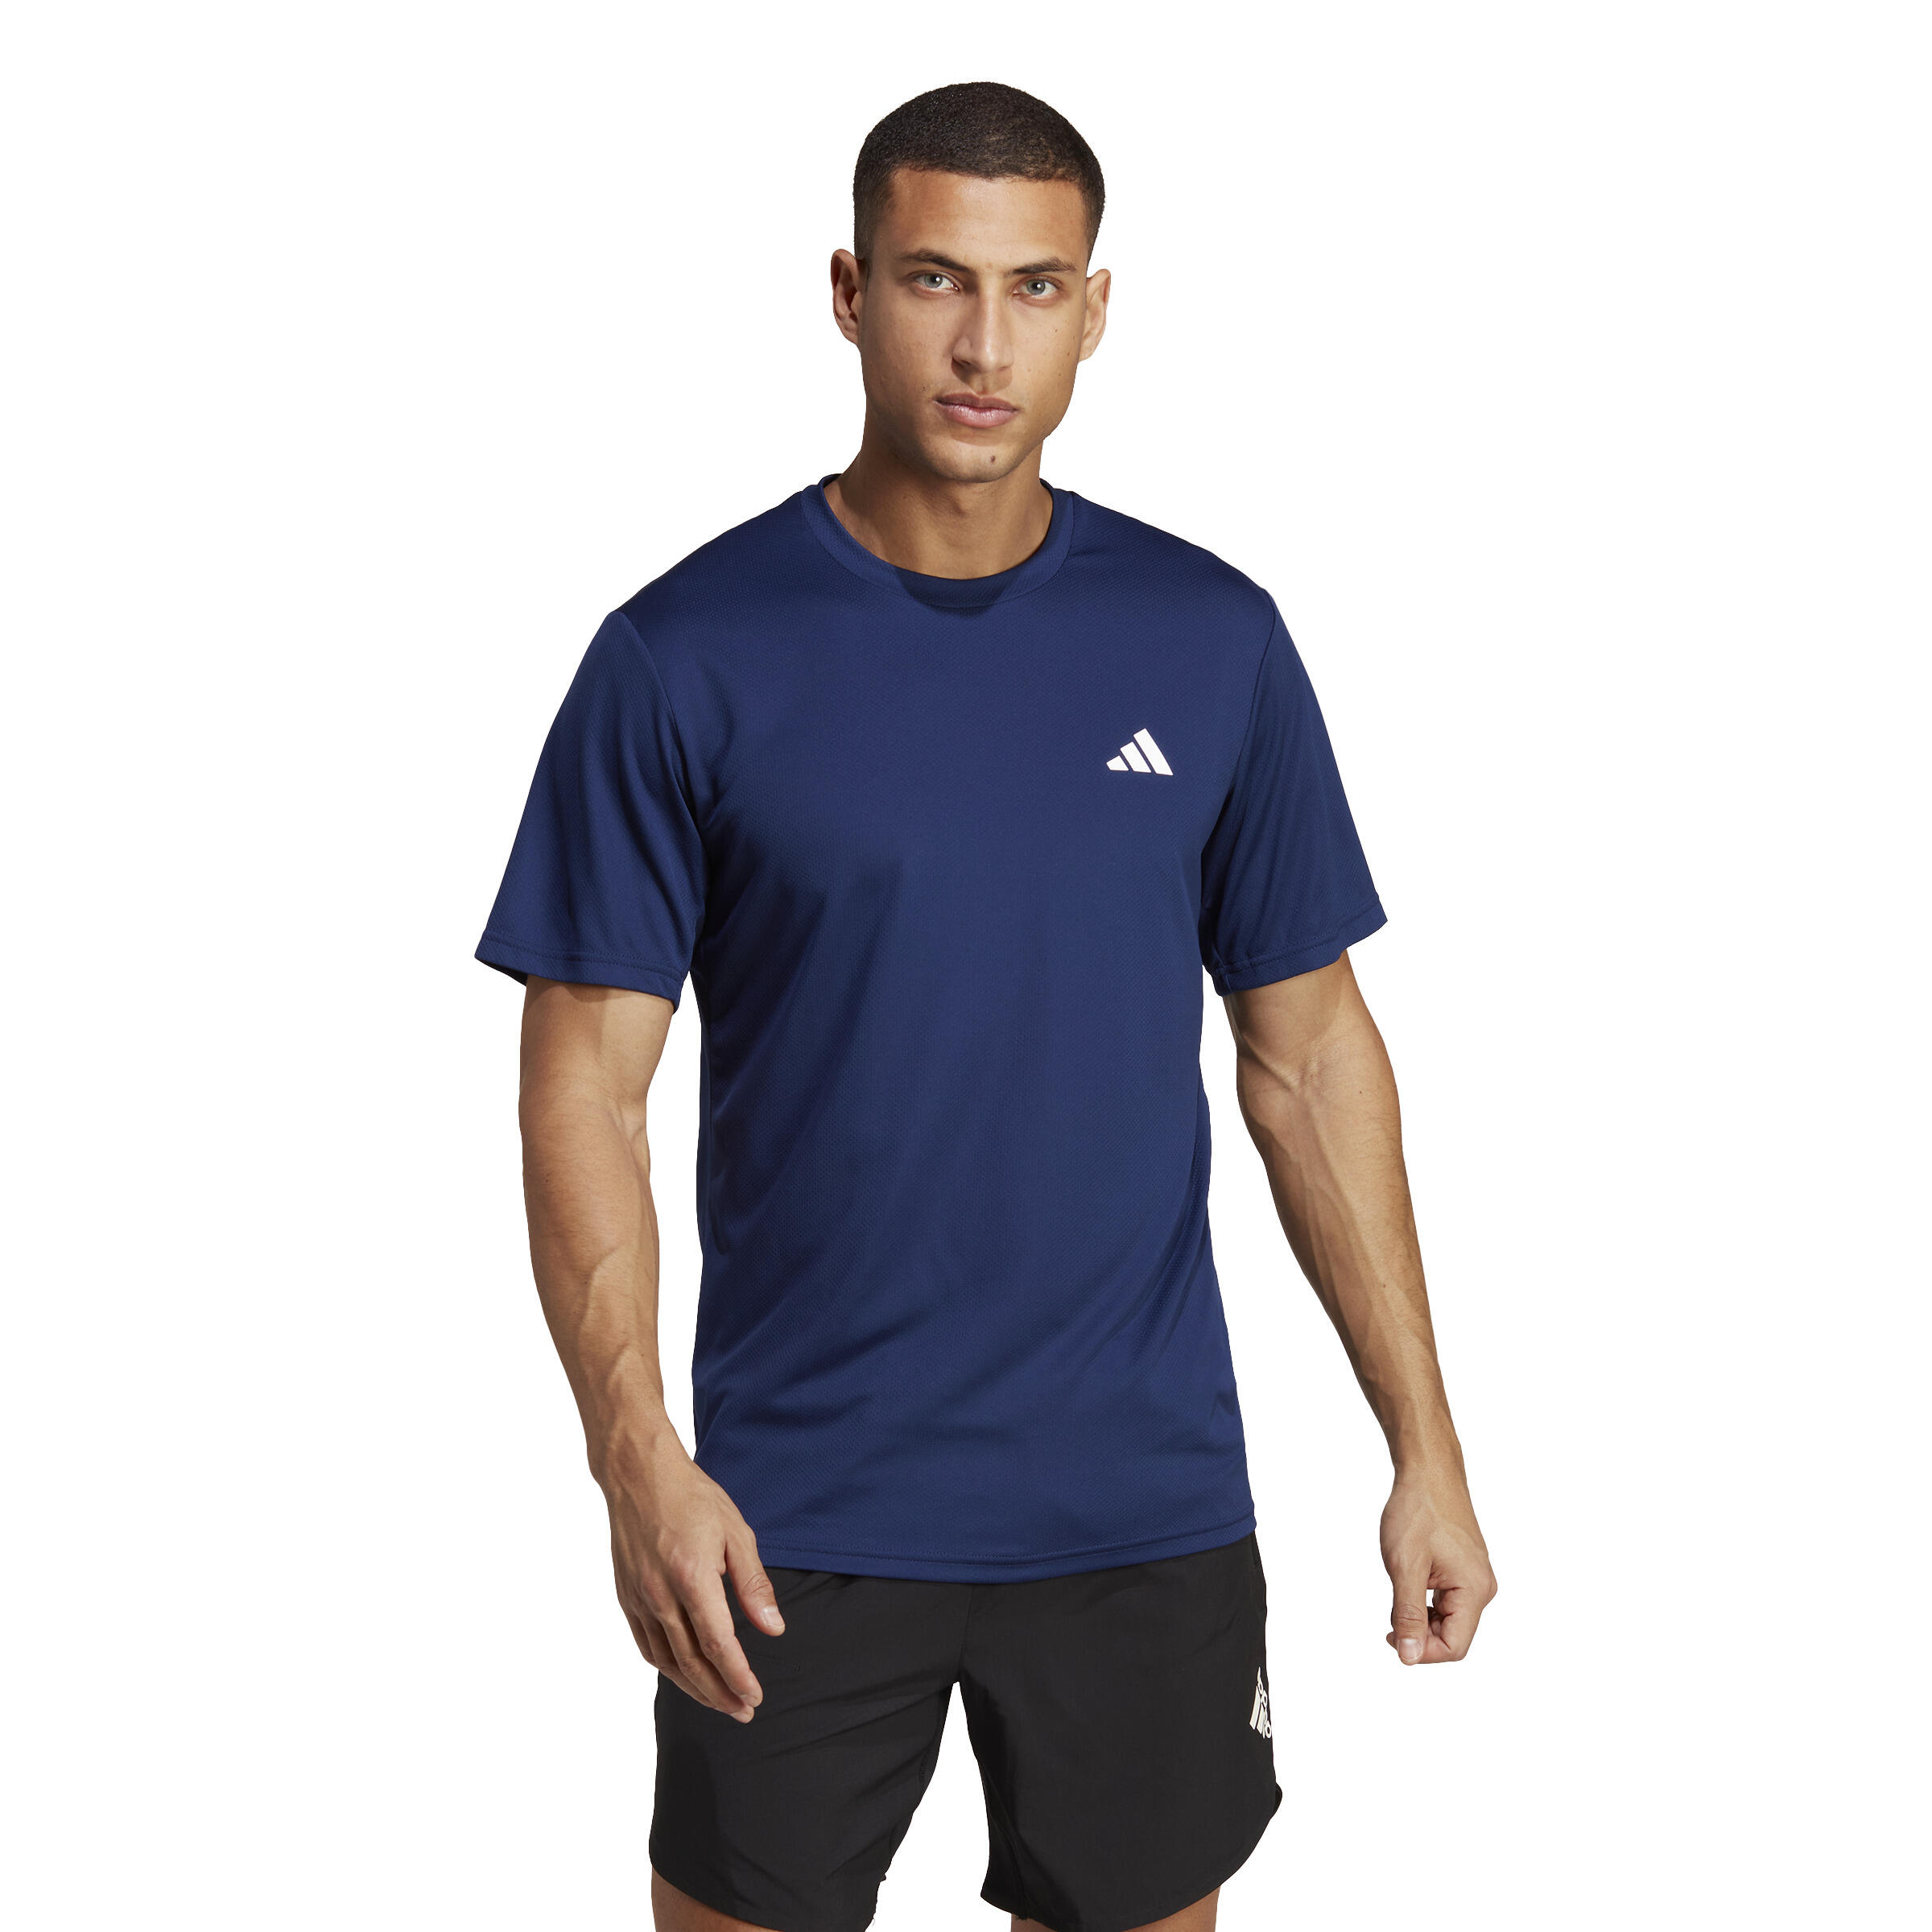 Men's Cardio Fitness T-Shirt - Blue 2/8